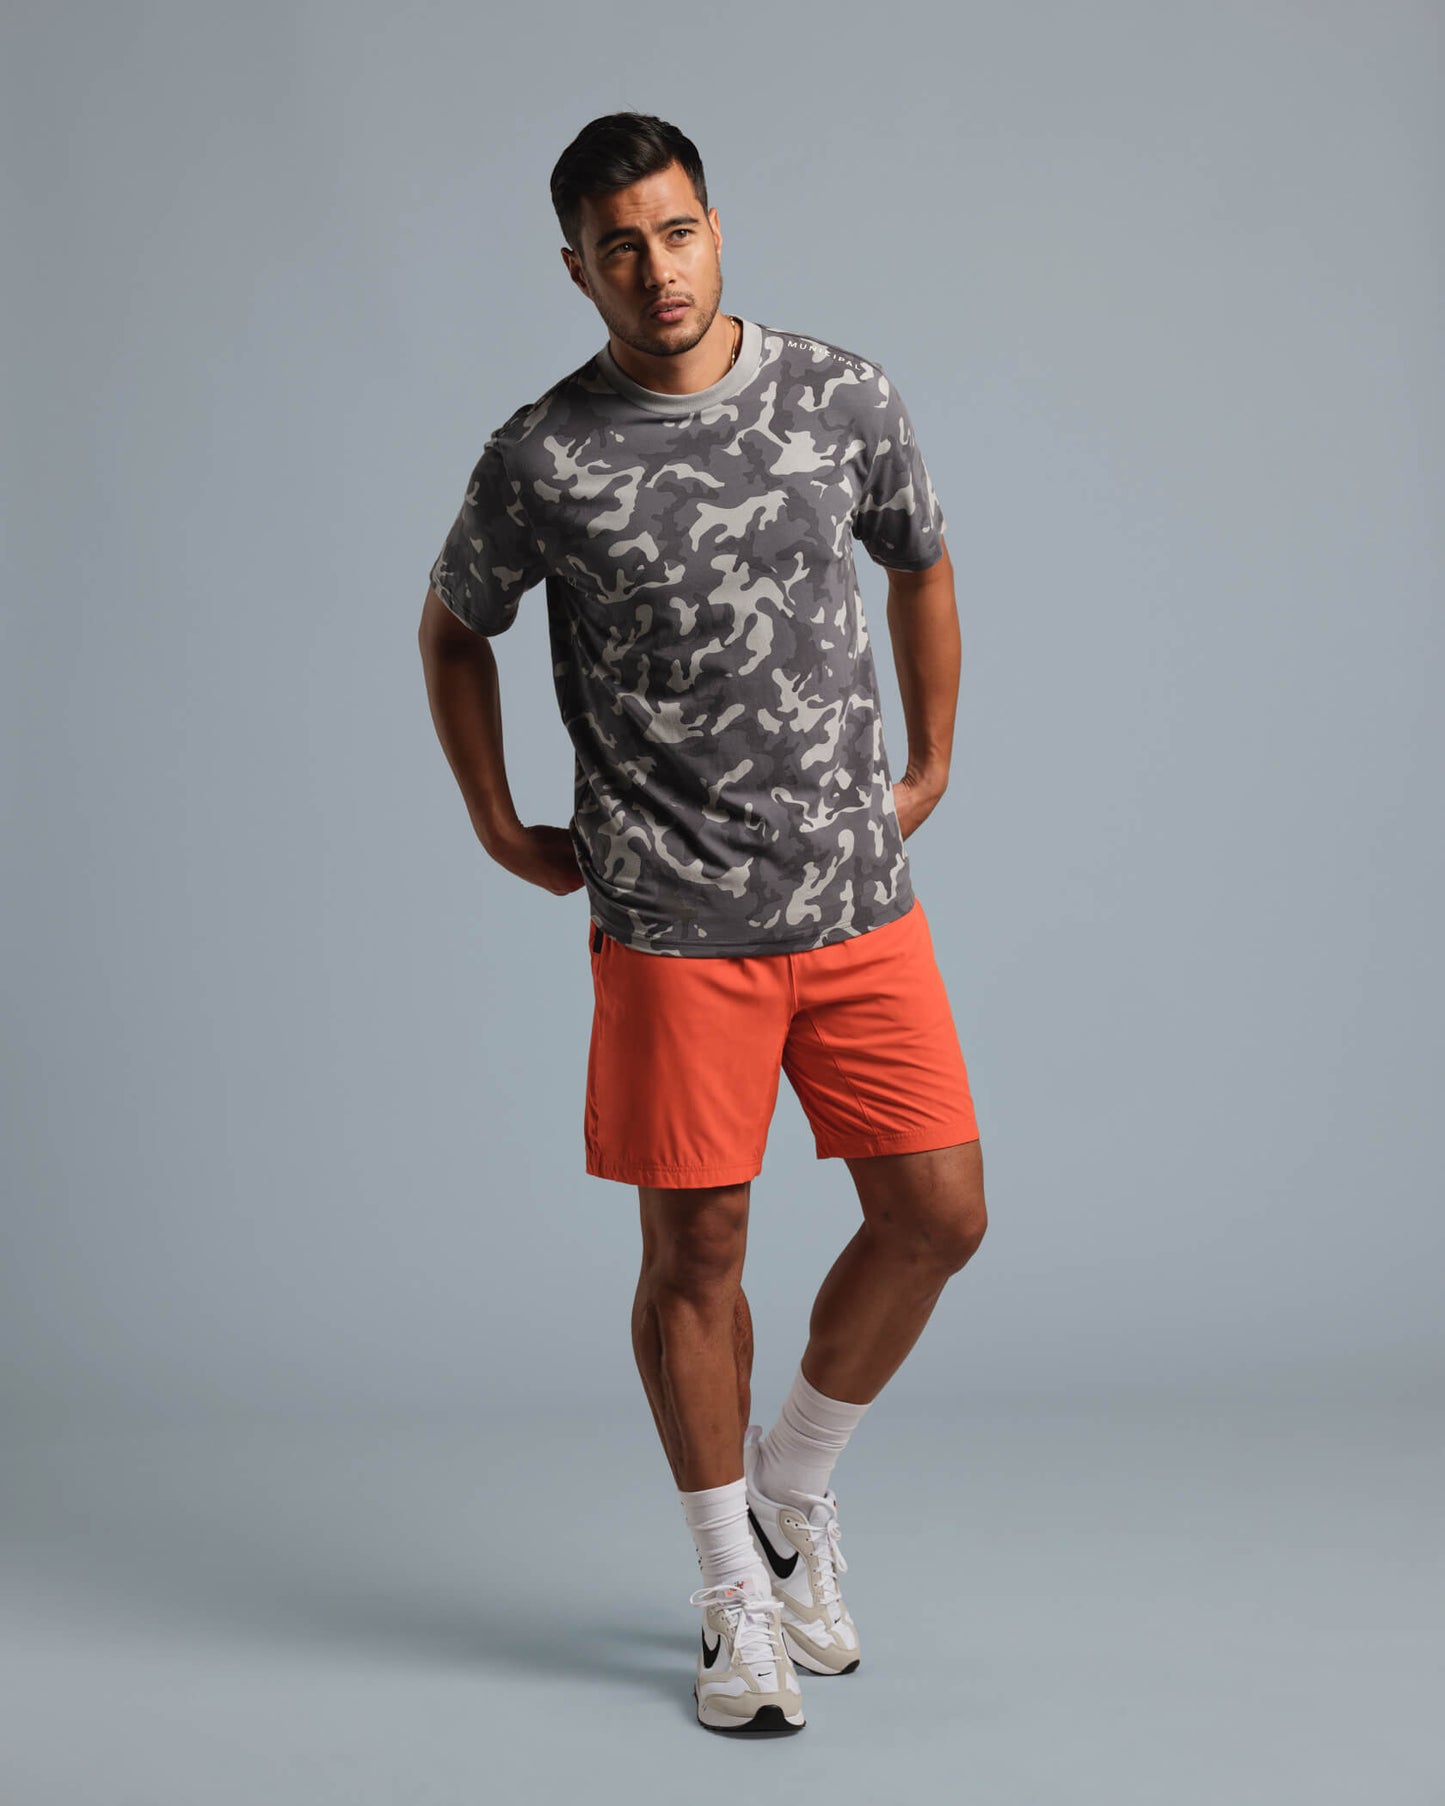 Enduro Stretch T-Shirt |Charcoal Camo| outfit